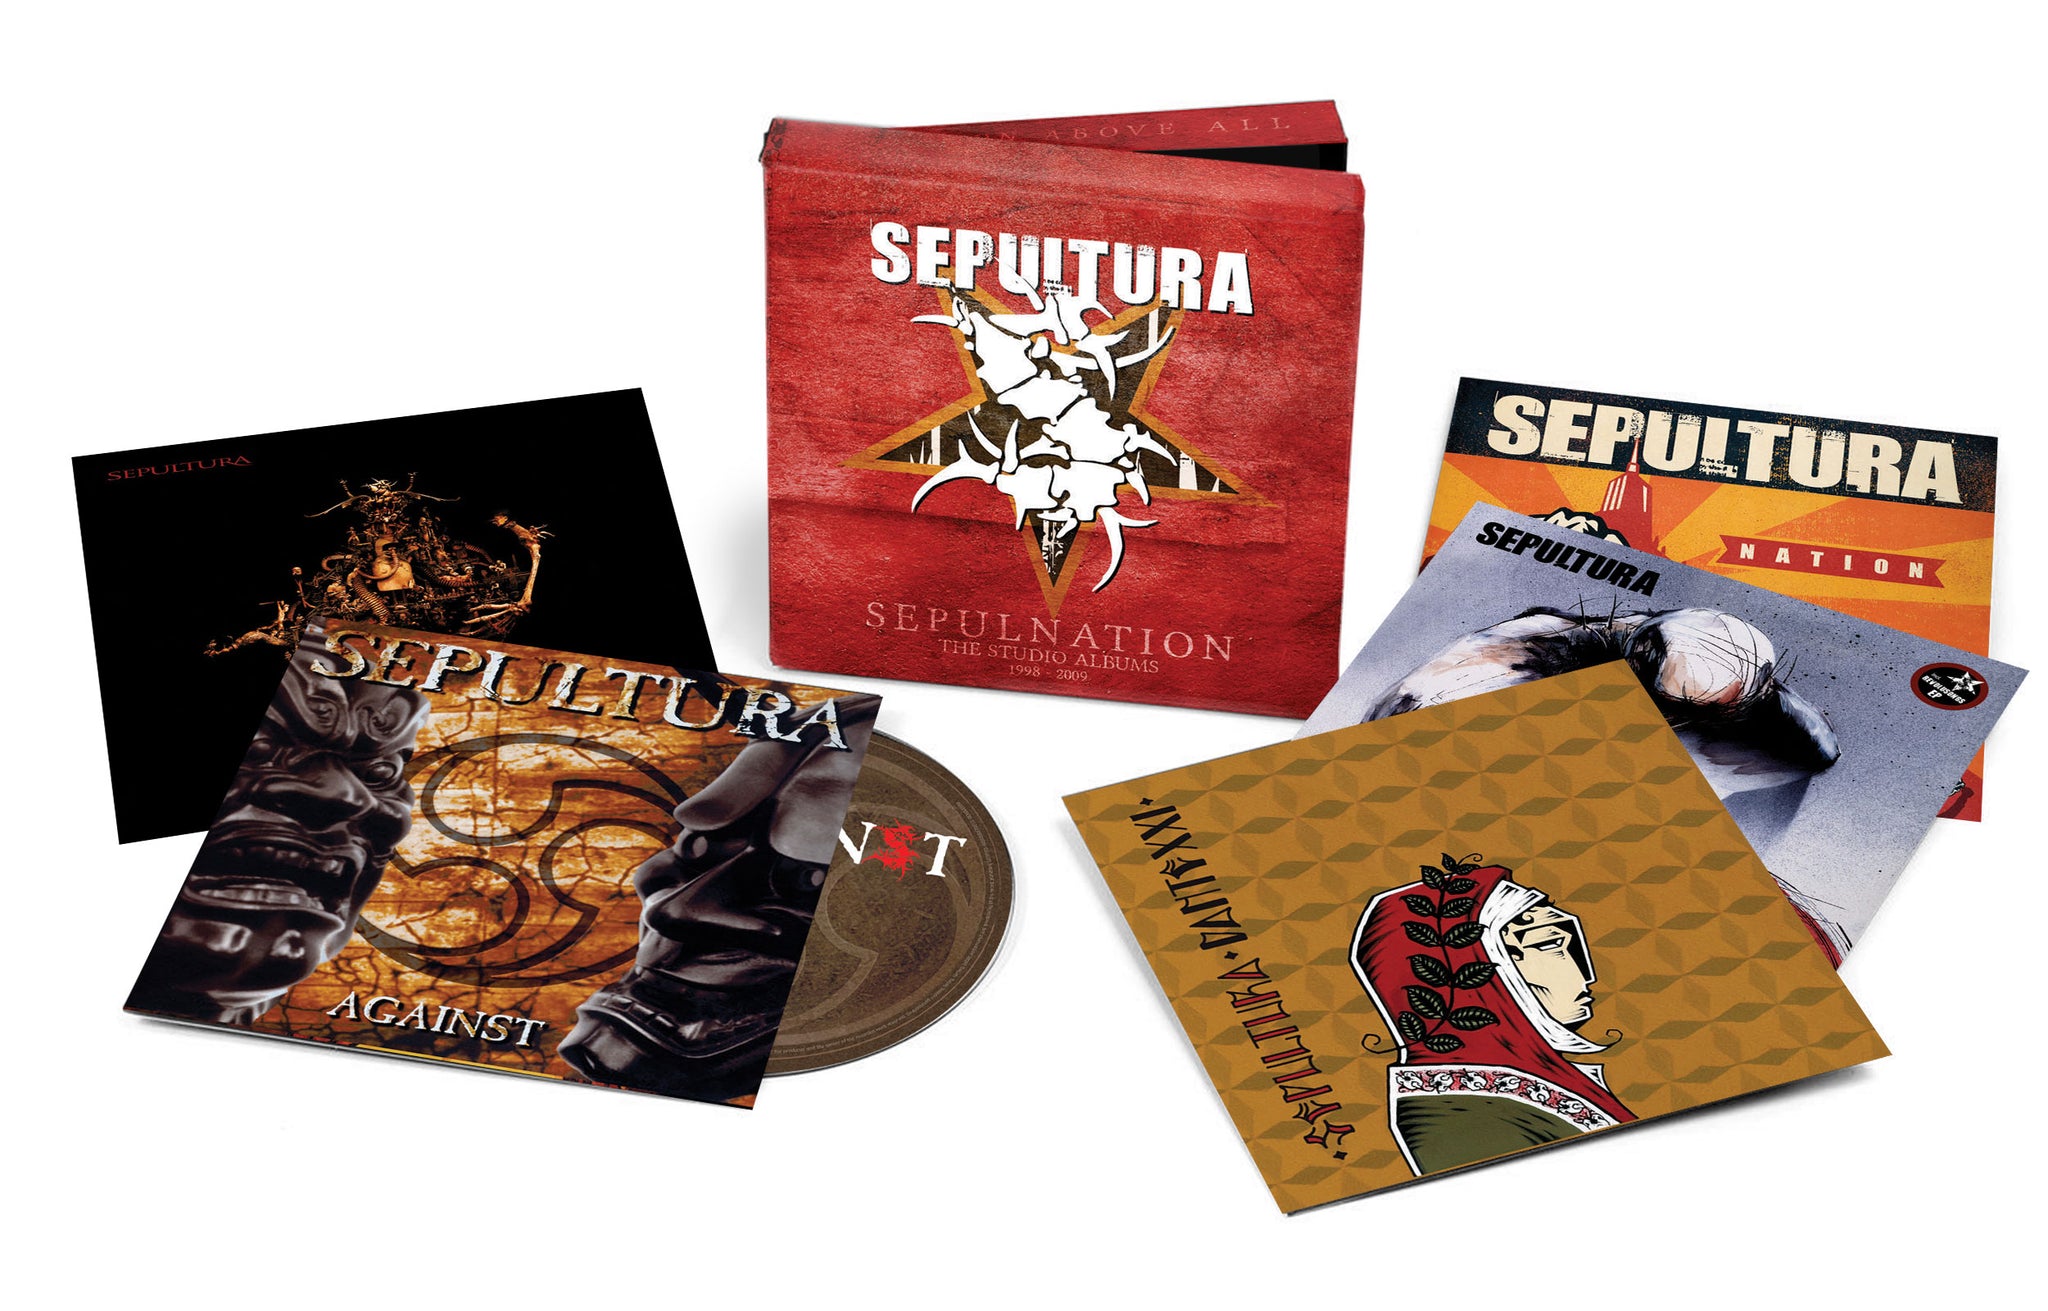 Sepultura "Sepulnation - The Studio Albums 1998-2009" 5 CD Clam Shell Box